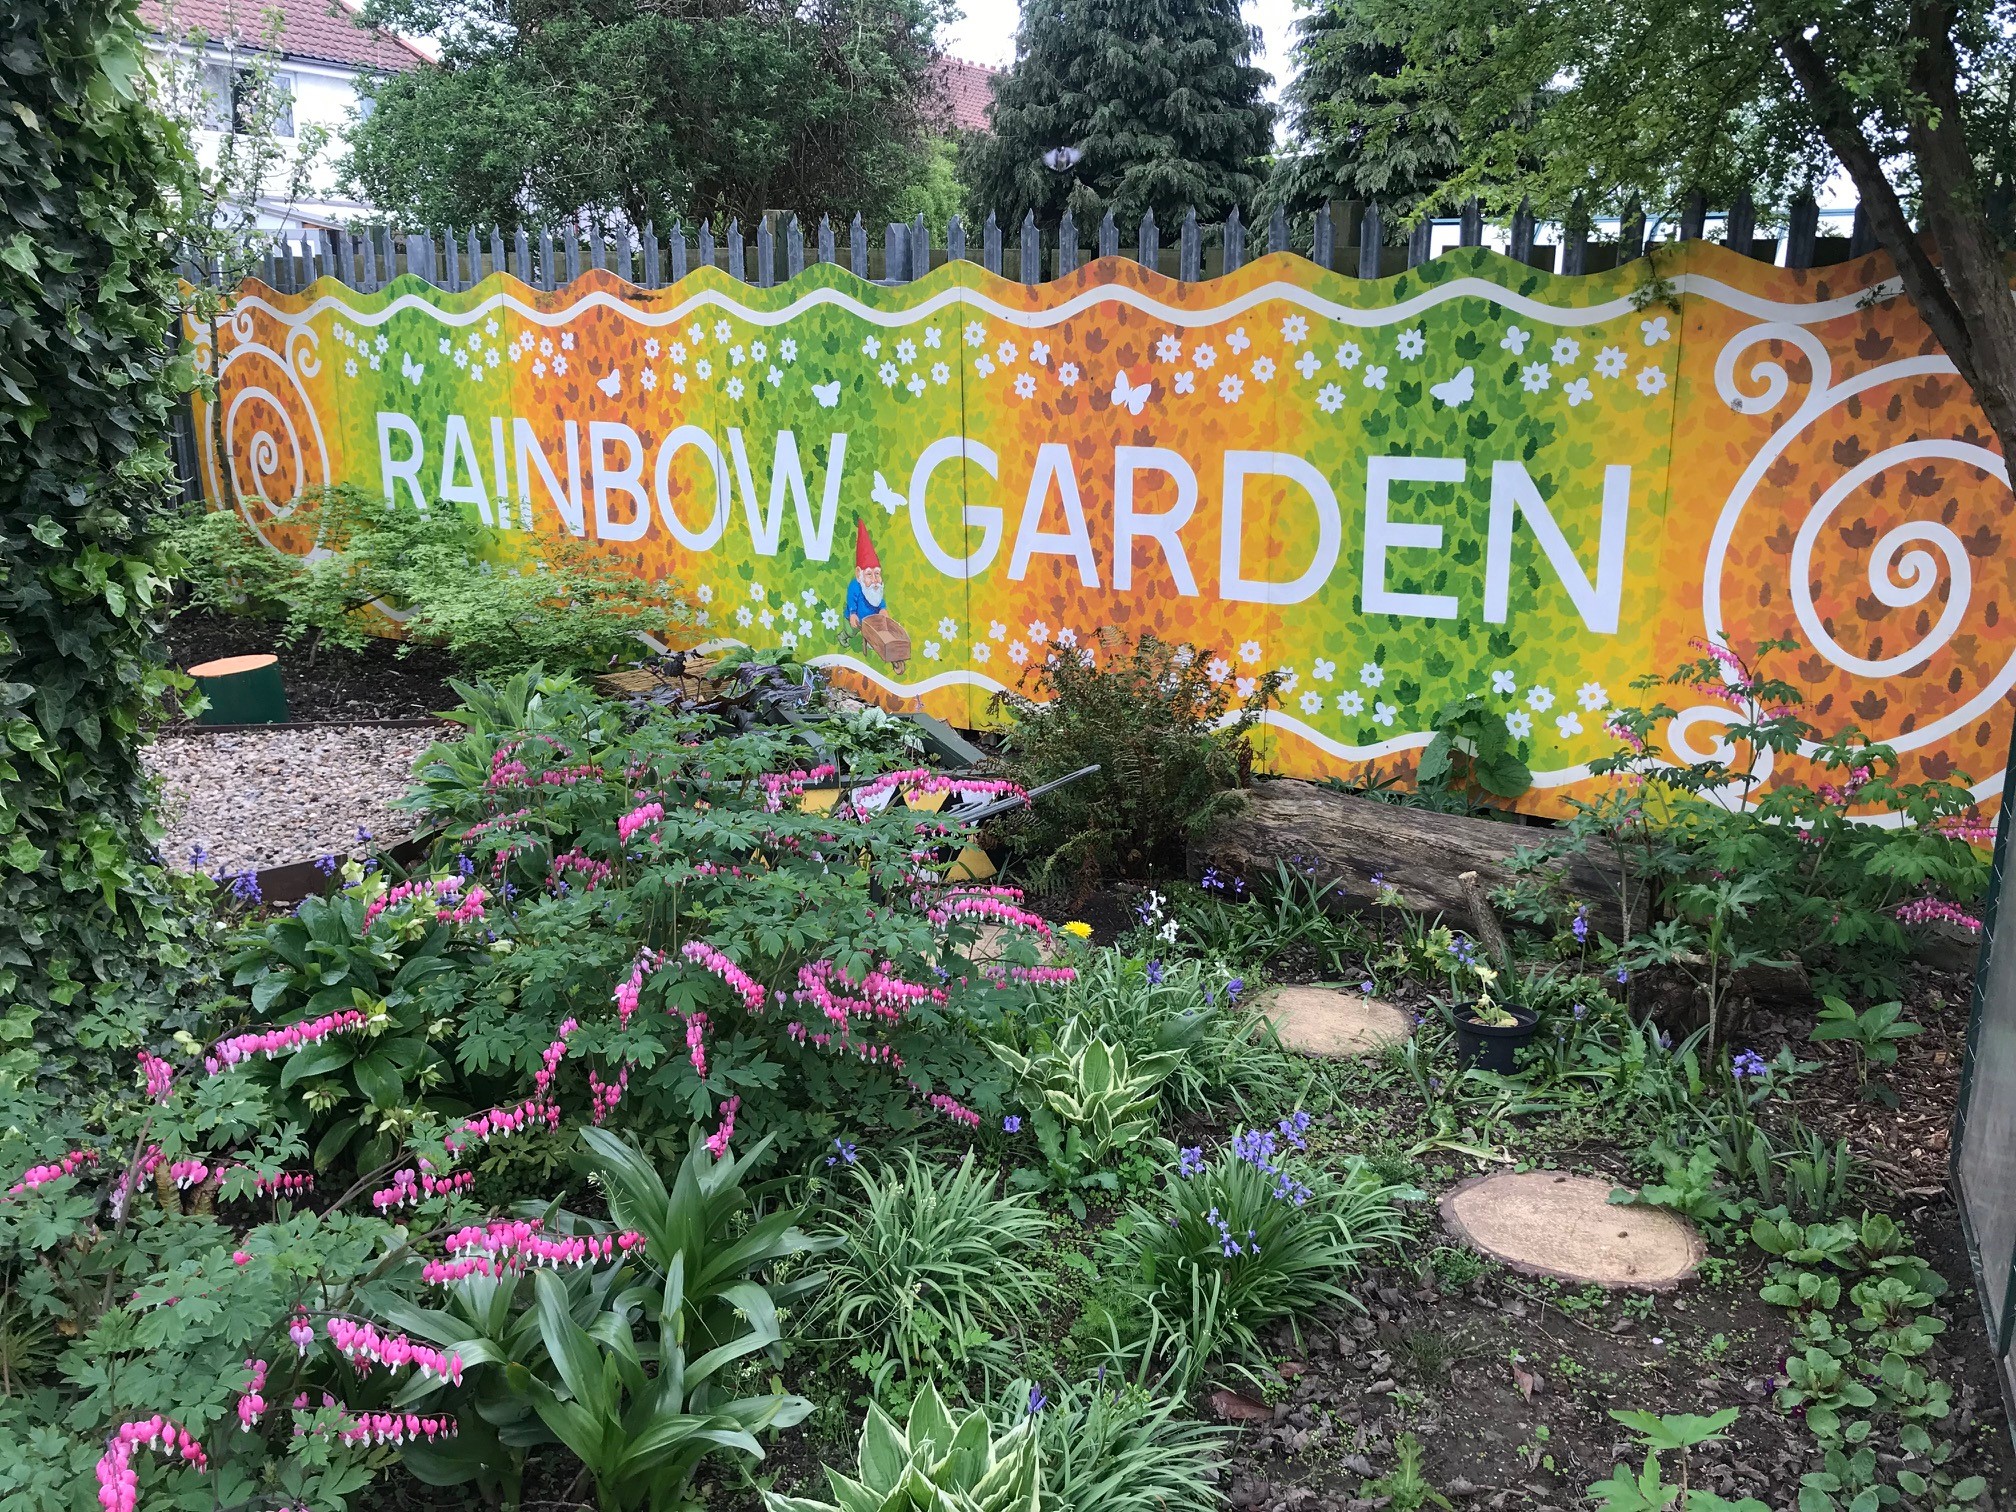 The secret rainbow garden.